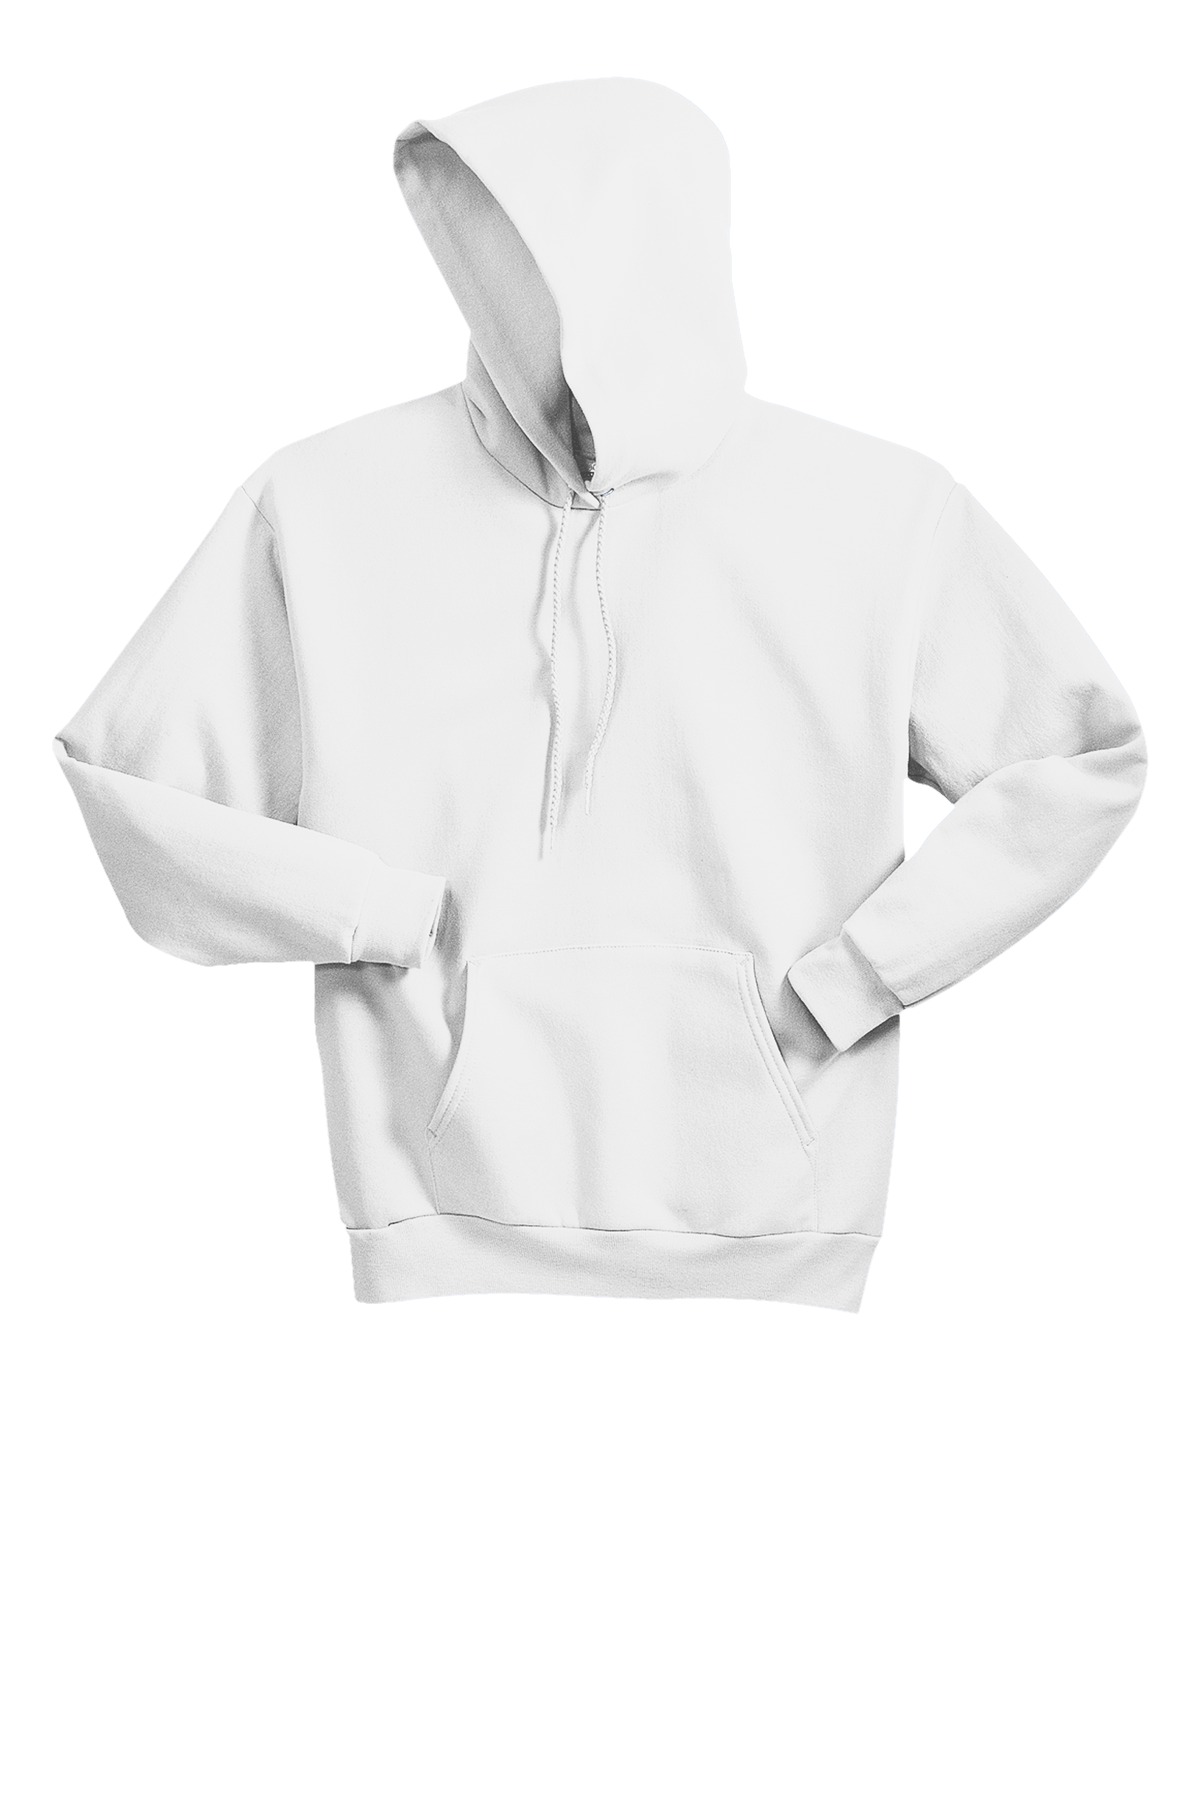 P170 Hanes EcoSmart - Pullover Hooded Sweatshirt